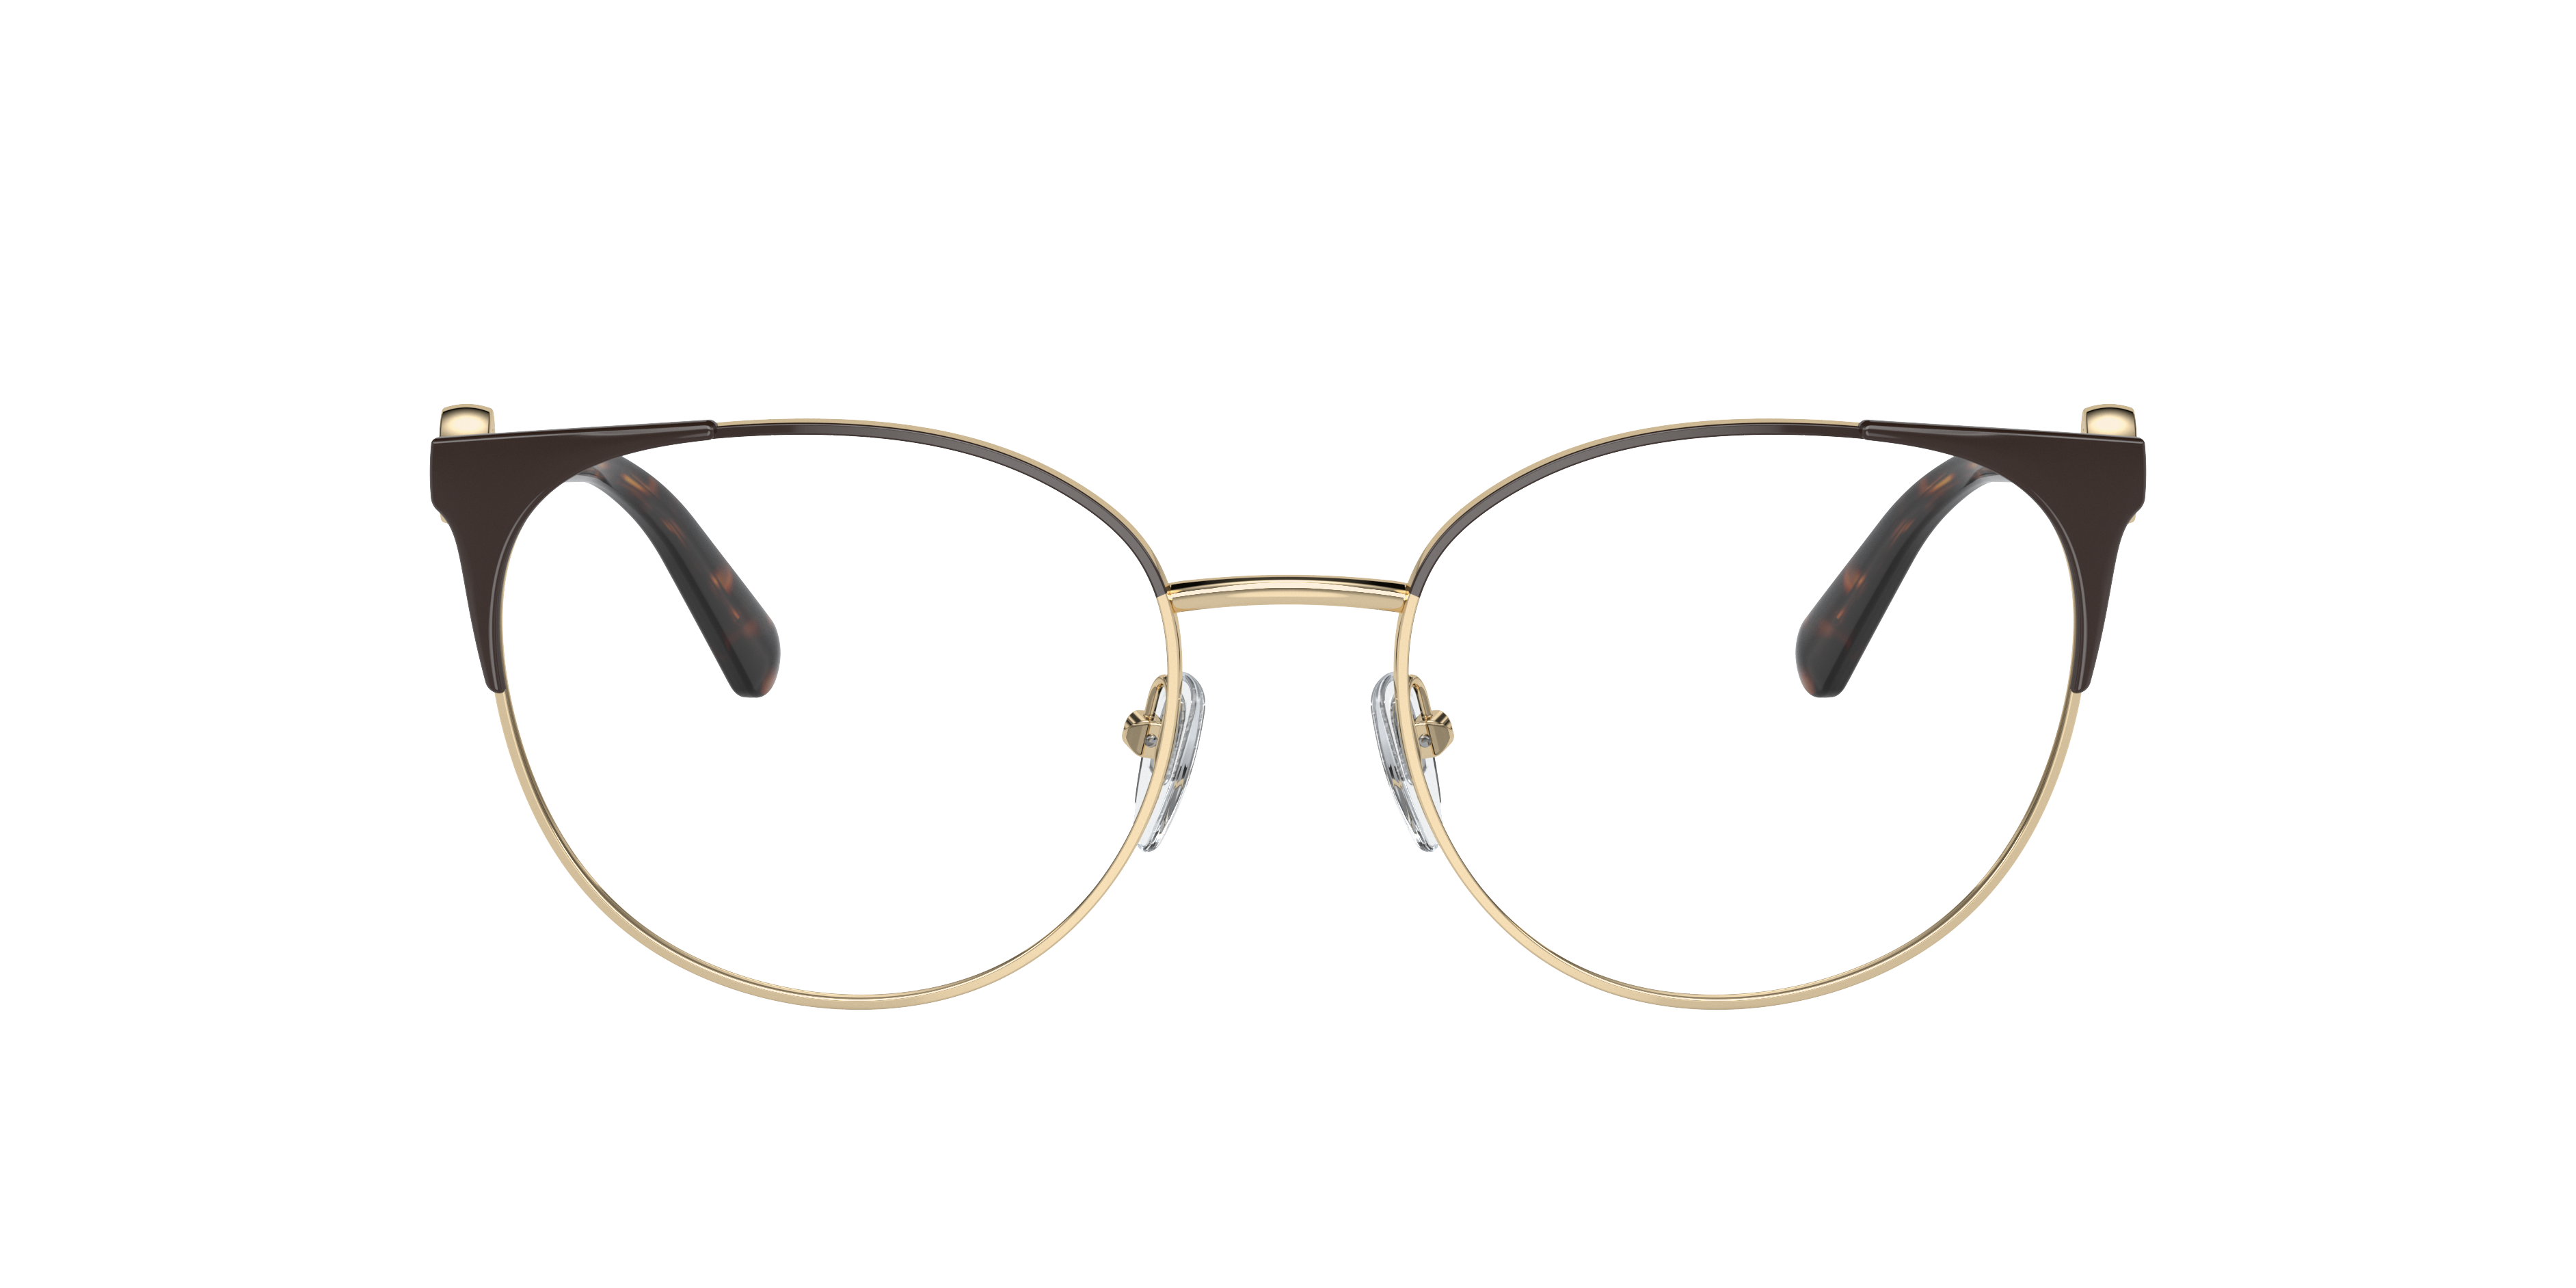 Bvlgari Bv 8253 women Sunglasses online sale